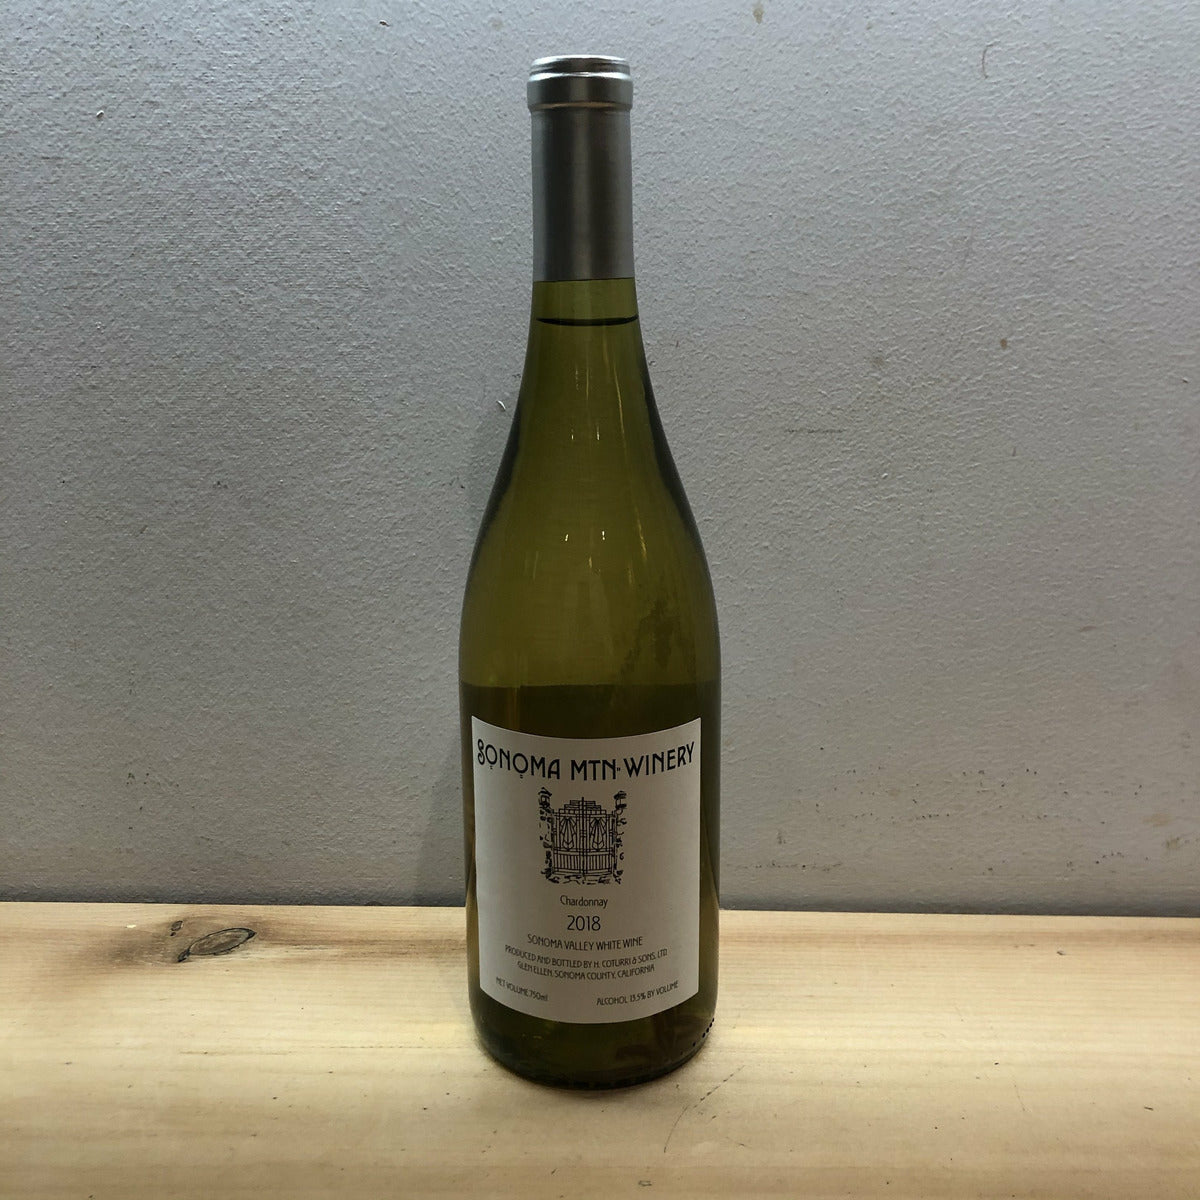 Sonoma Mtn Winery, Chardonnay 2018